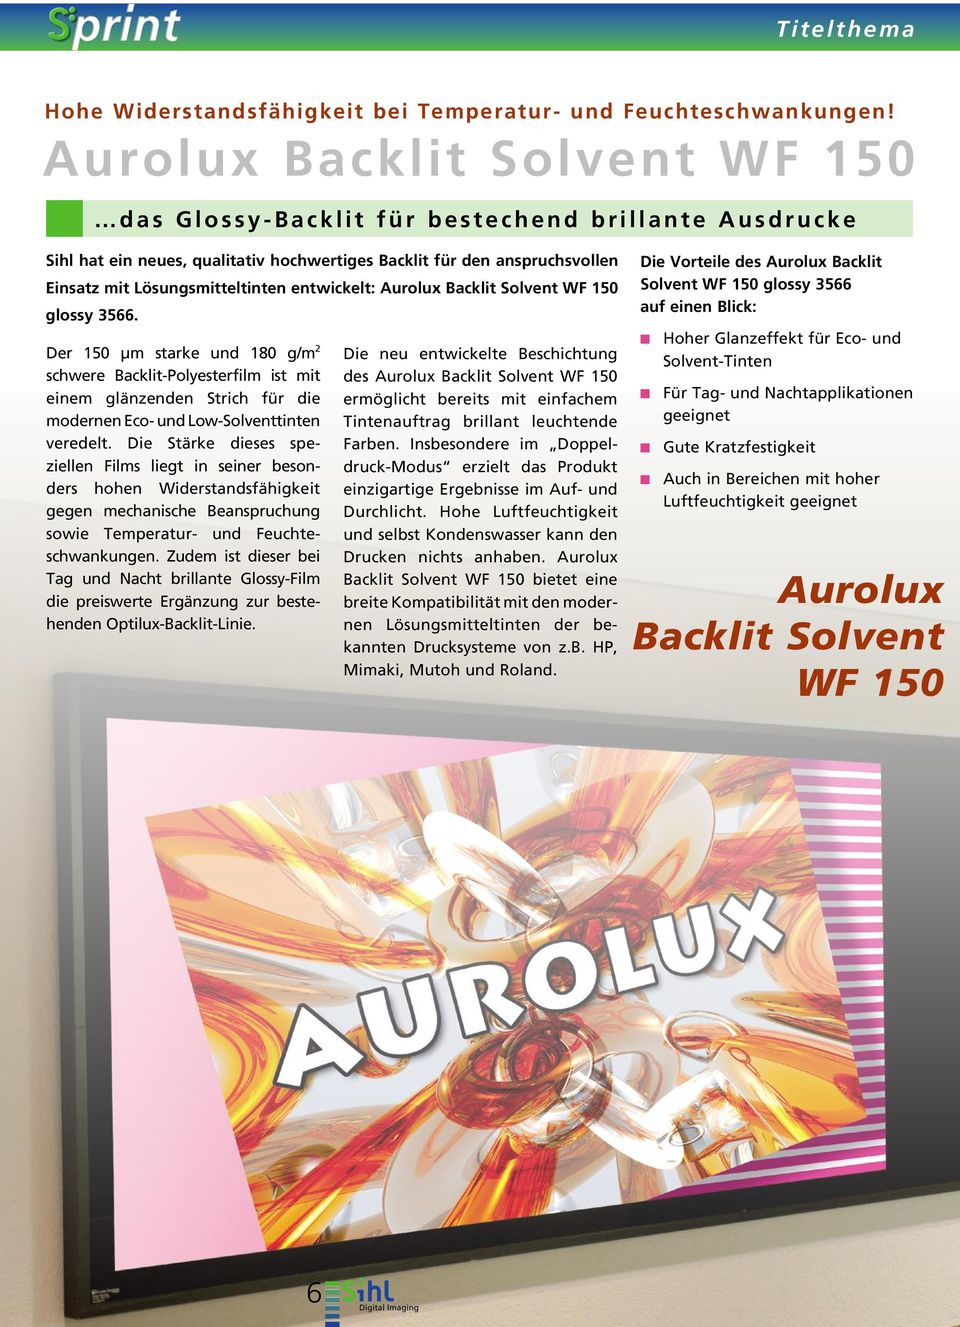 entwickelt: Aurolux Backlit Solvent WF 150 glossy 3566.